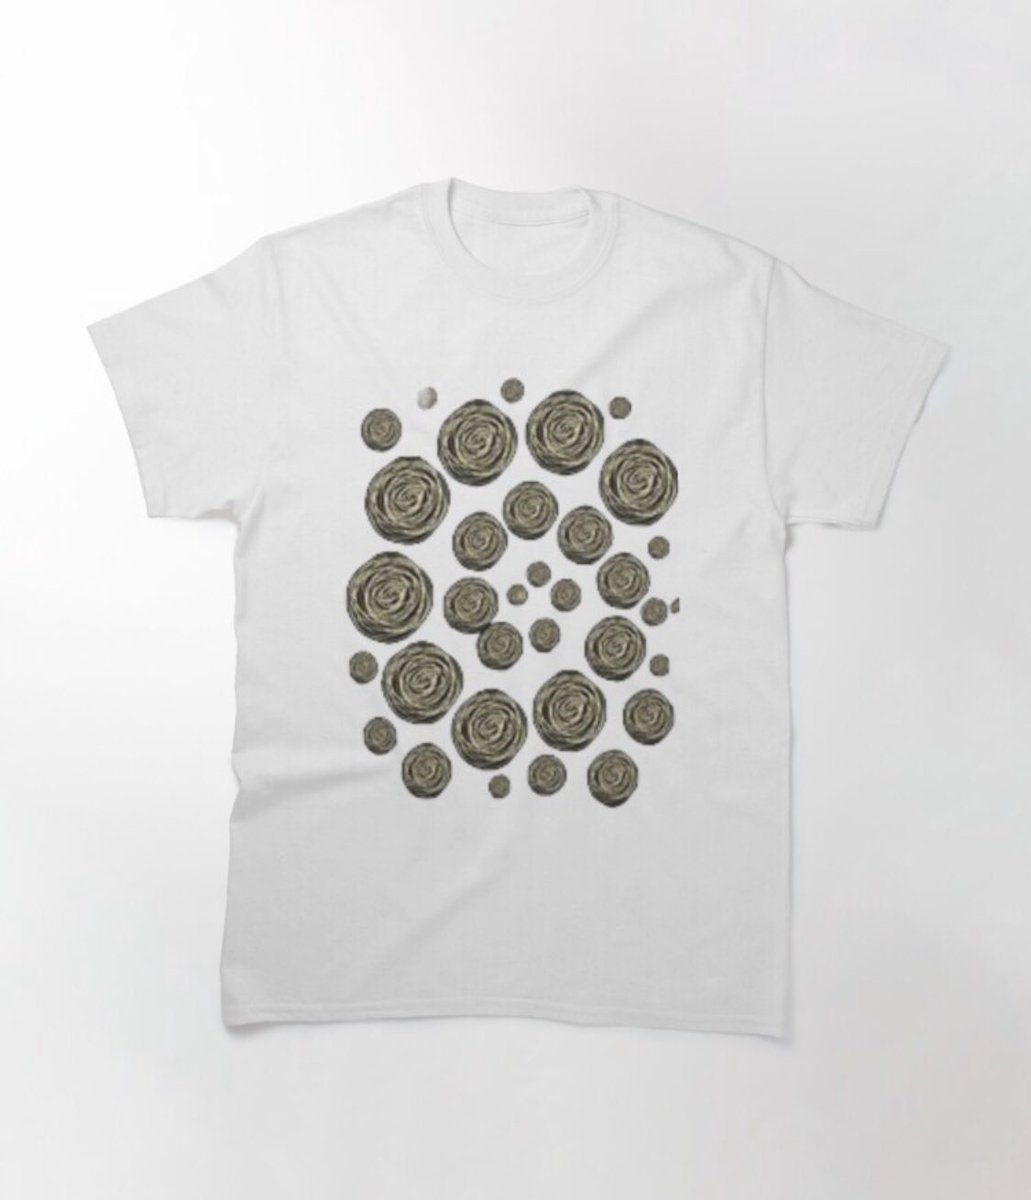 Classic T-Shirt #redbubble #rmdscreations #teesdesign #spirals #prettysimple #simple #dots #circles